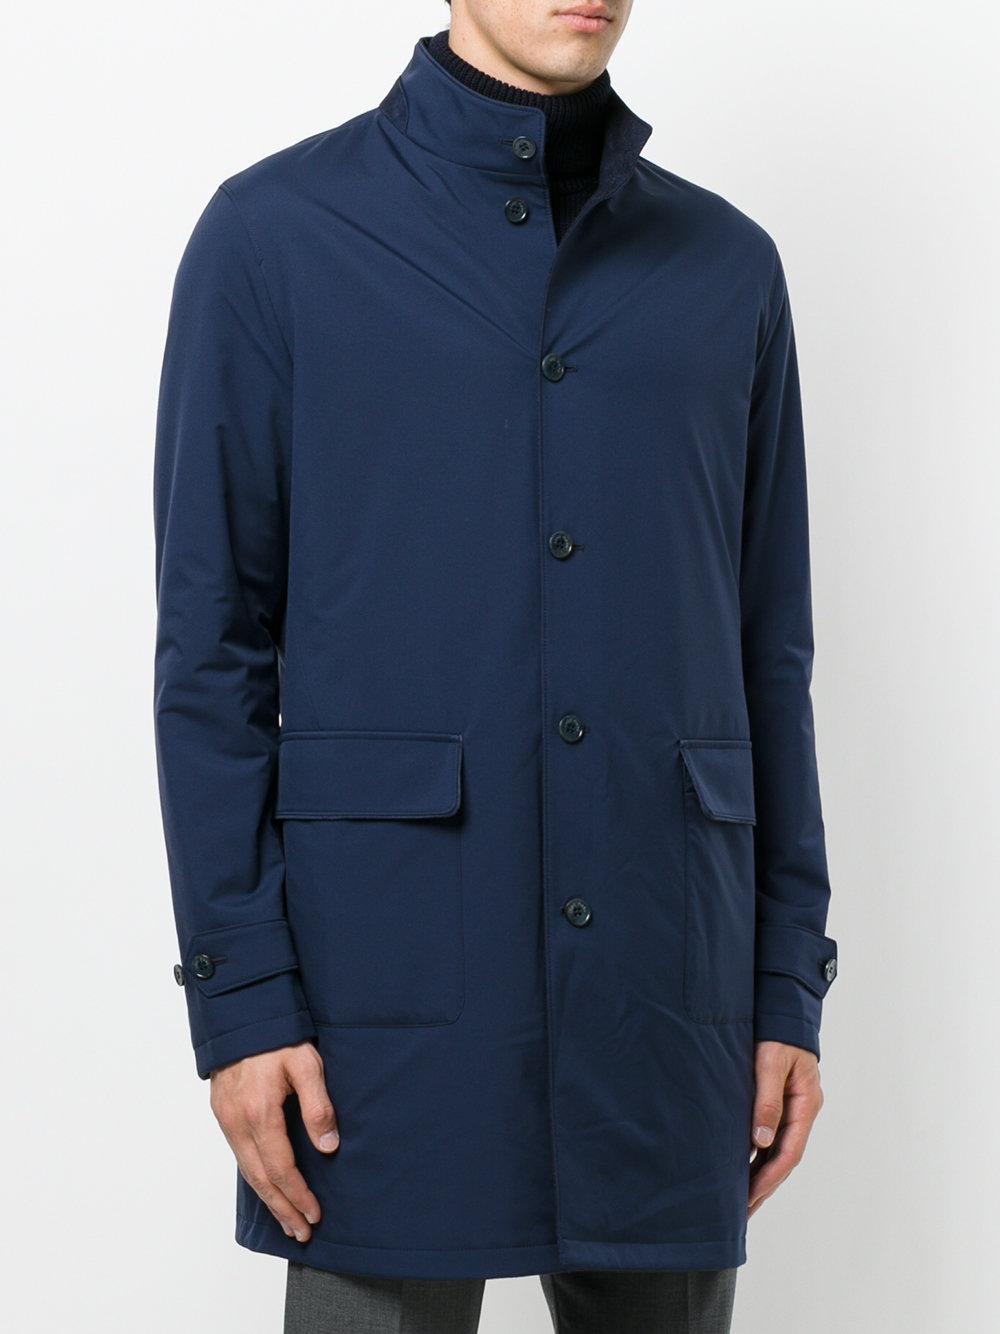 Lyst - Loro Piana Reversible Coat in Blue for Men